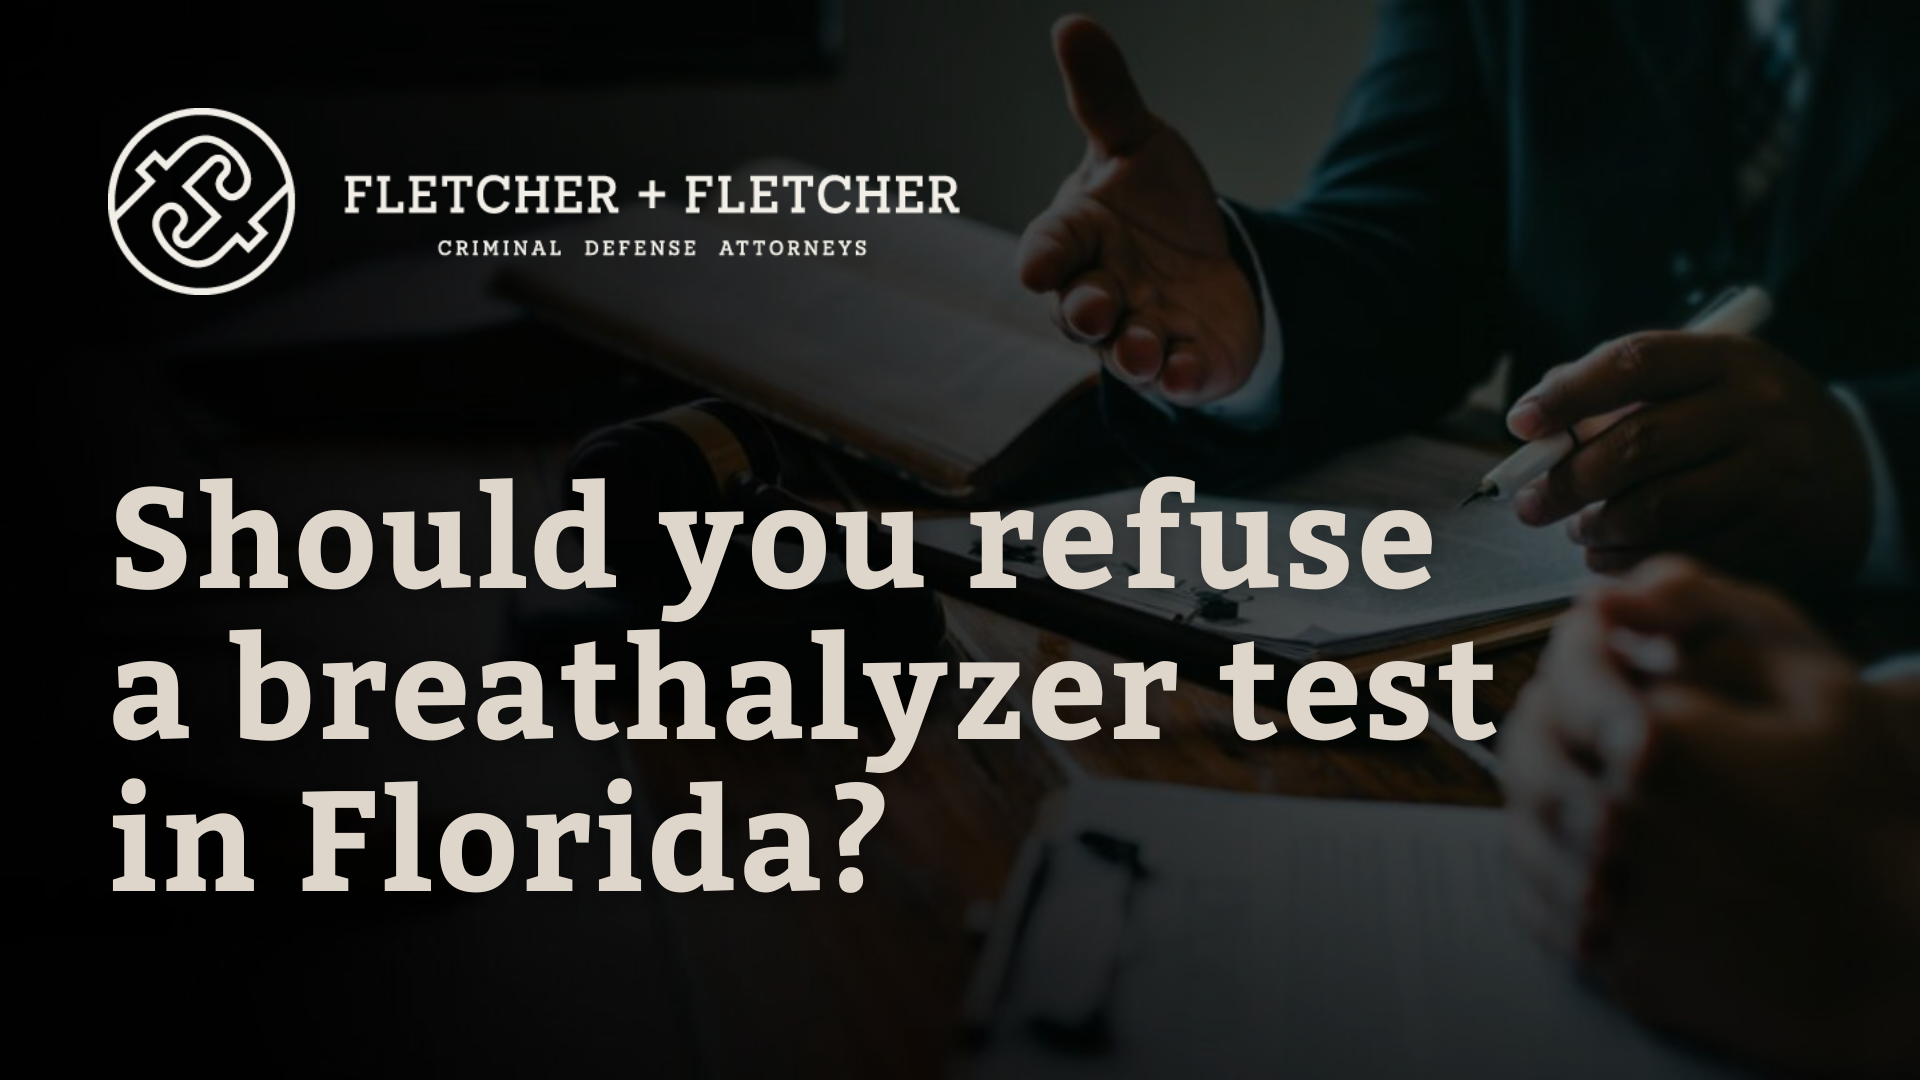 should you refuse a breathalyzer in florida - St. Petersburg florida criminal defense - fletcher and fletcher